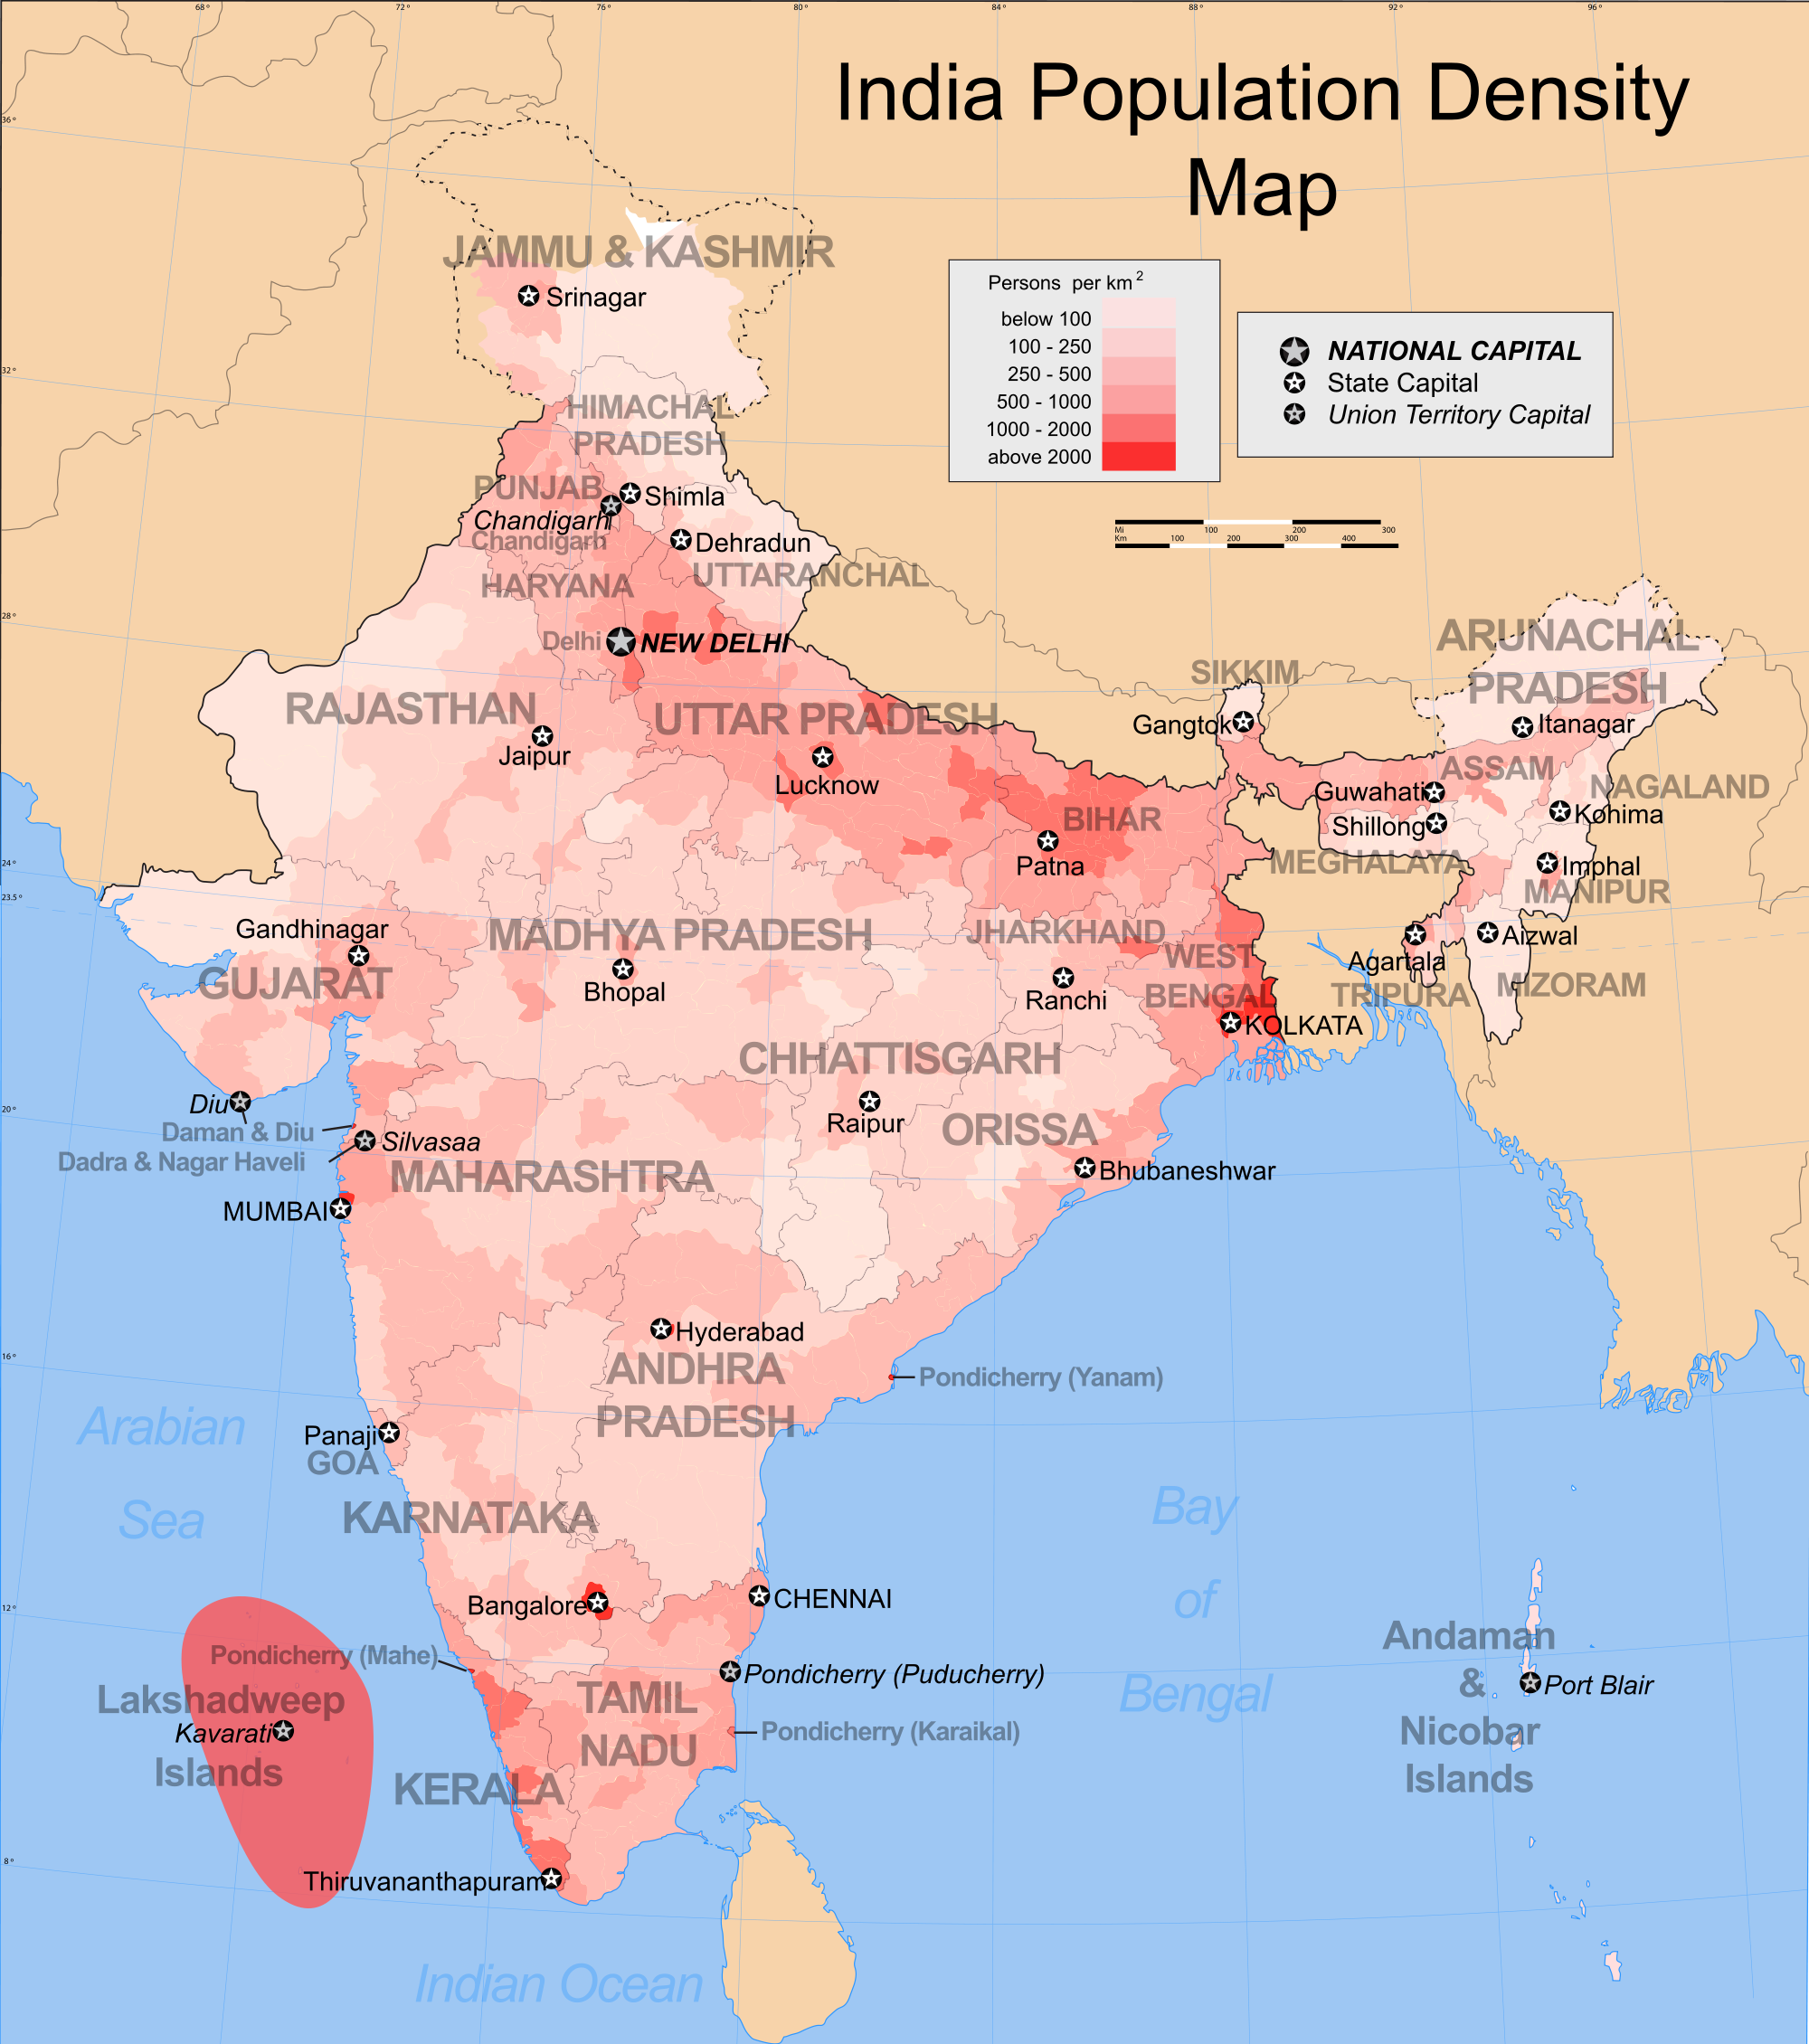 Rank of Indian States Based on Population Density